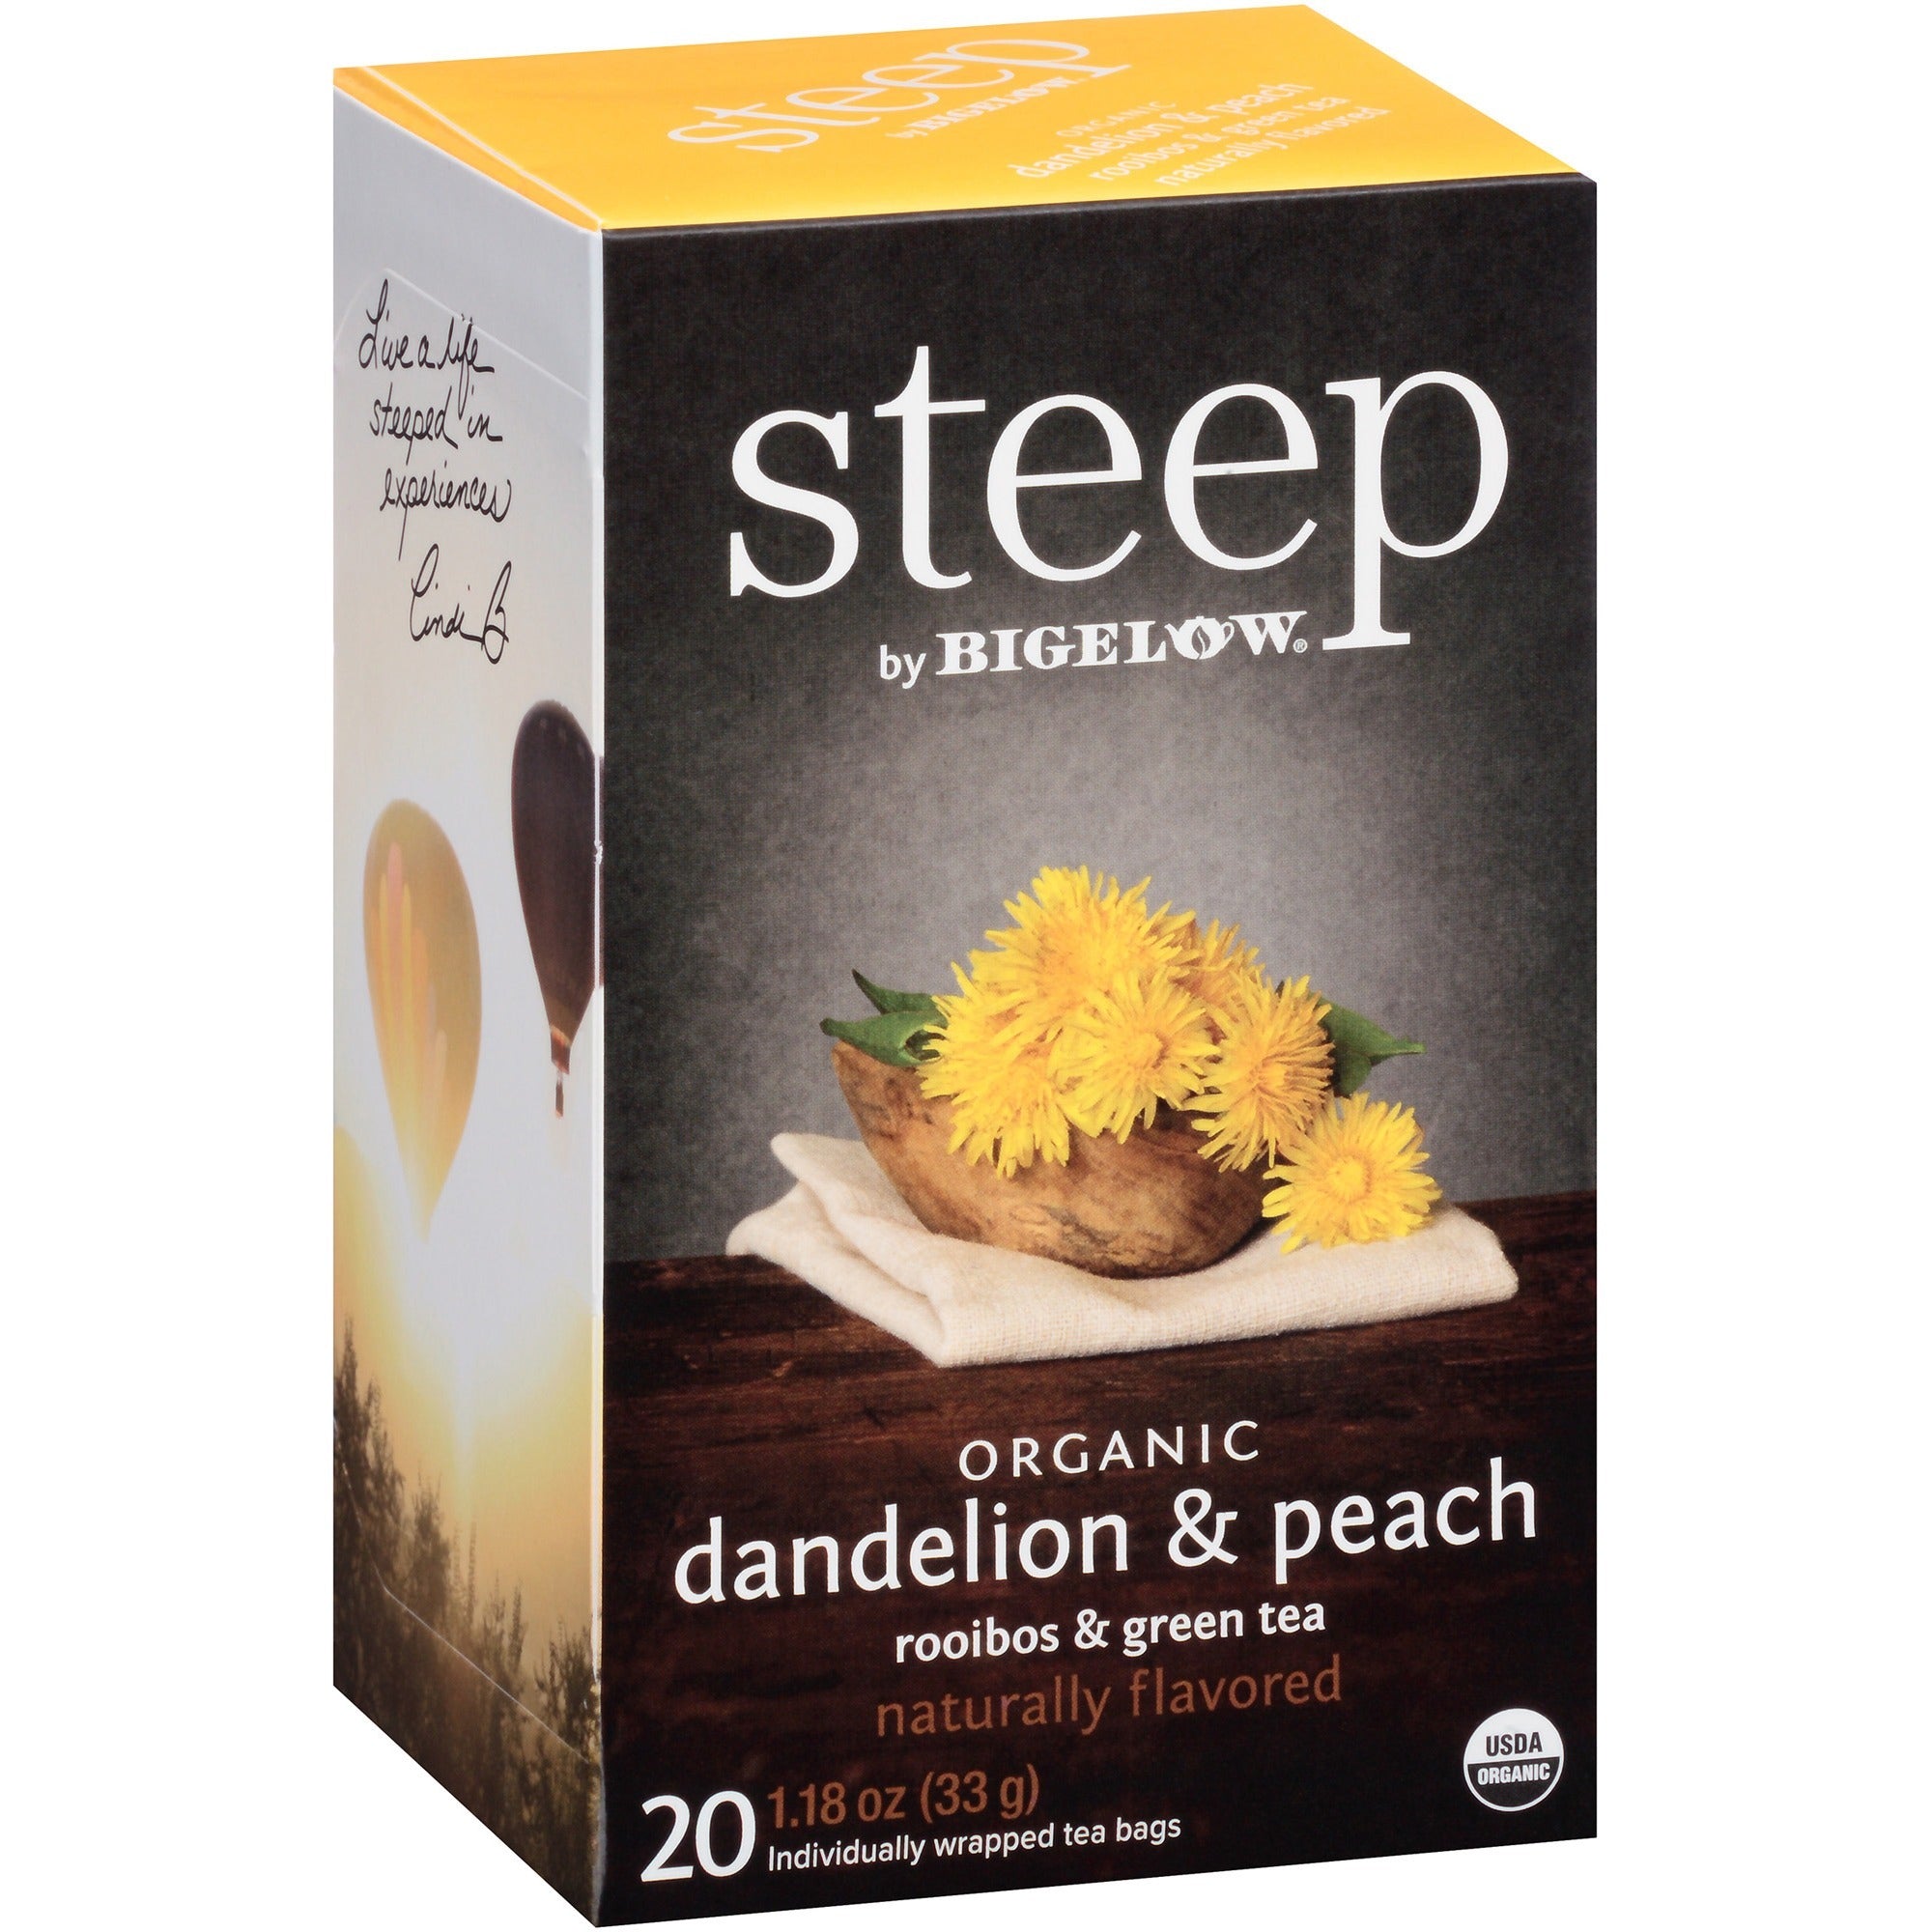 bigelow-organic-dandelion-&-peach-rooibos-&-green-tea-herbal-tea-green-tea-bag-12-oz-20-teabag-20-box_btc17715 - 1